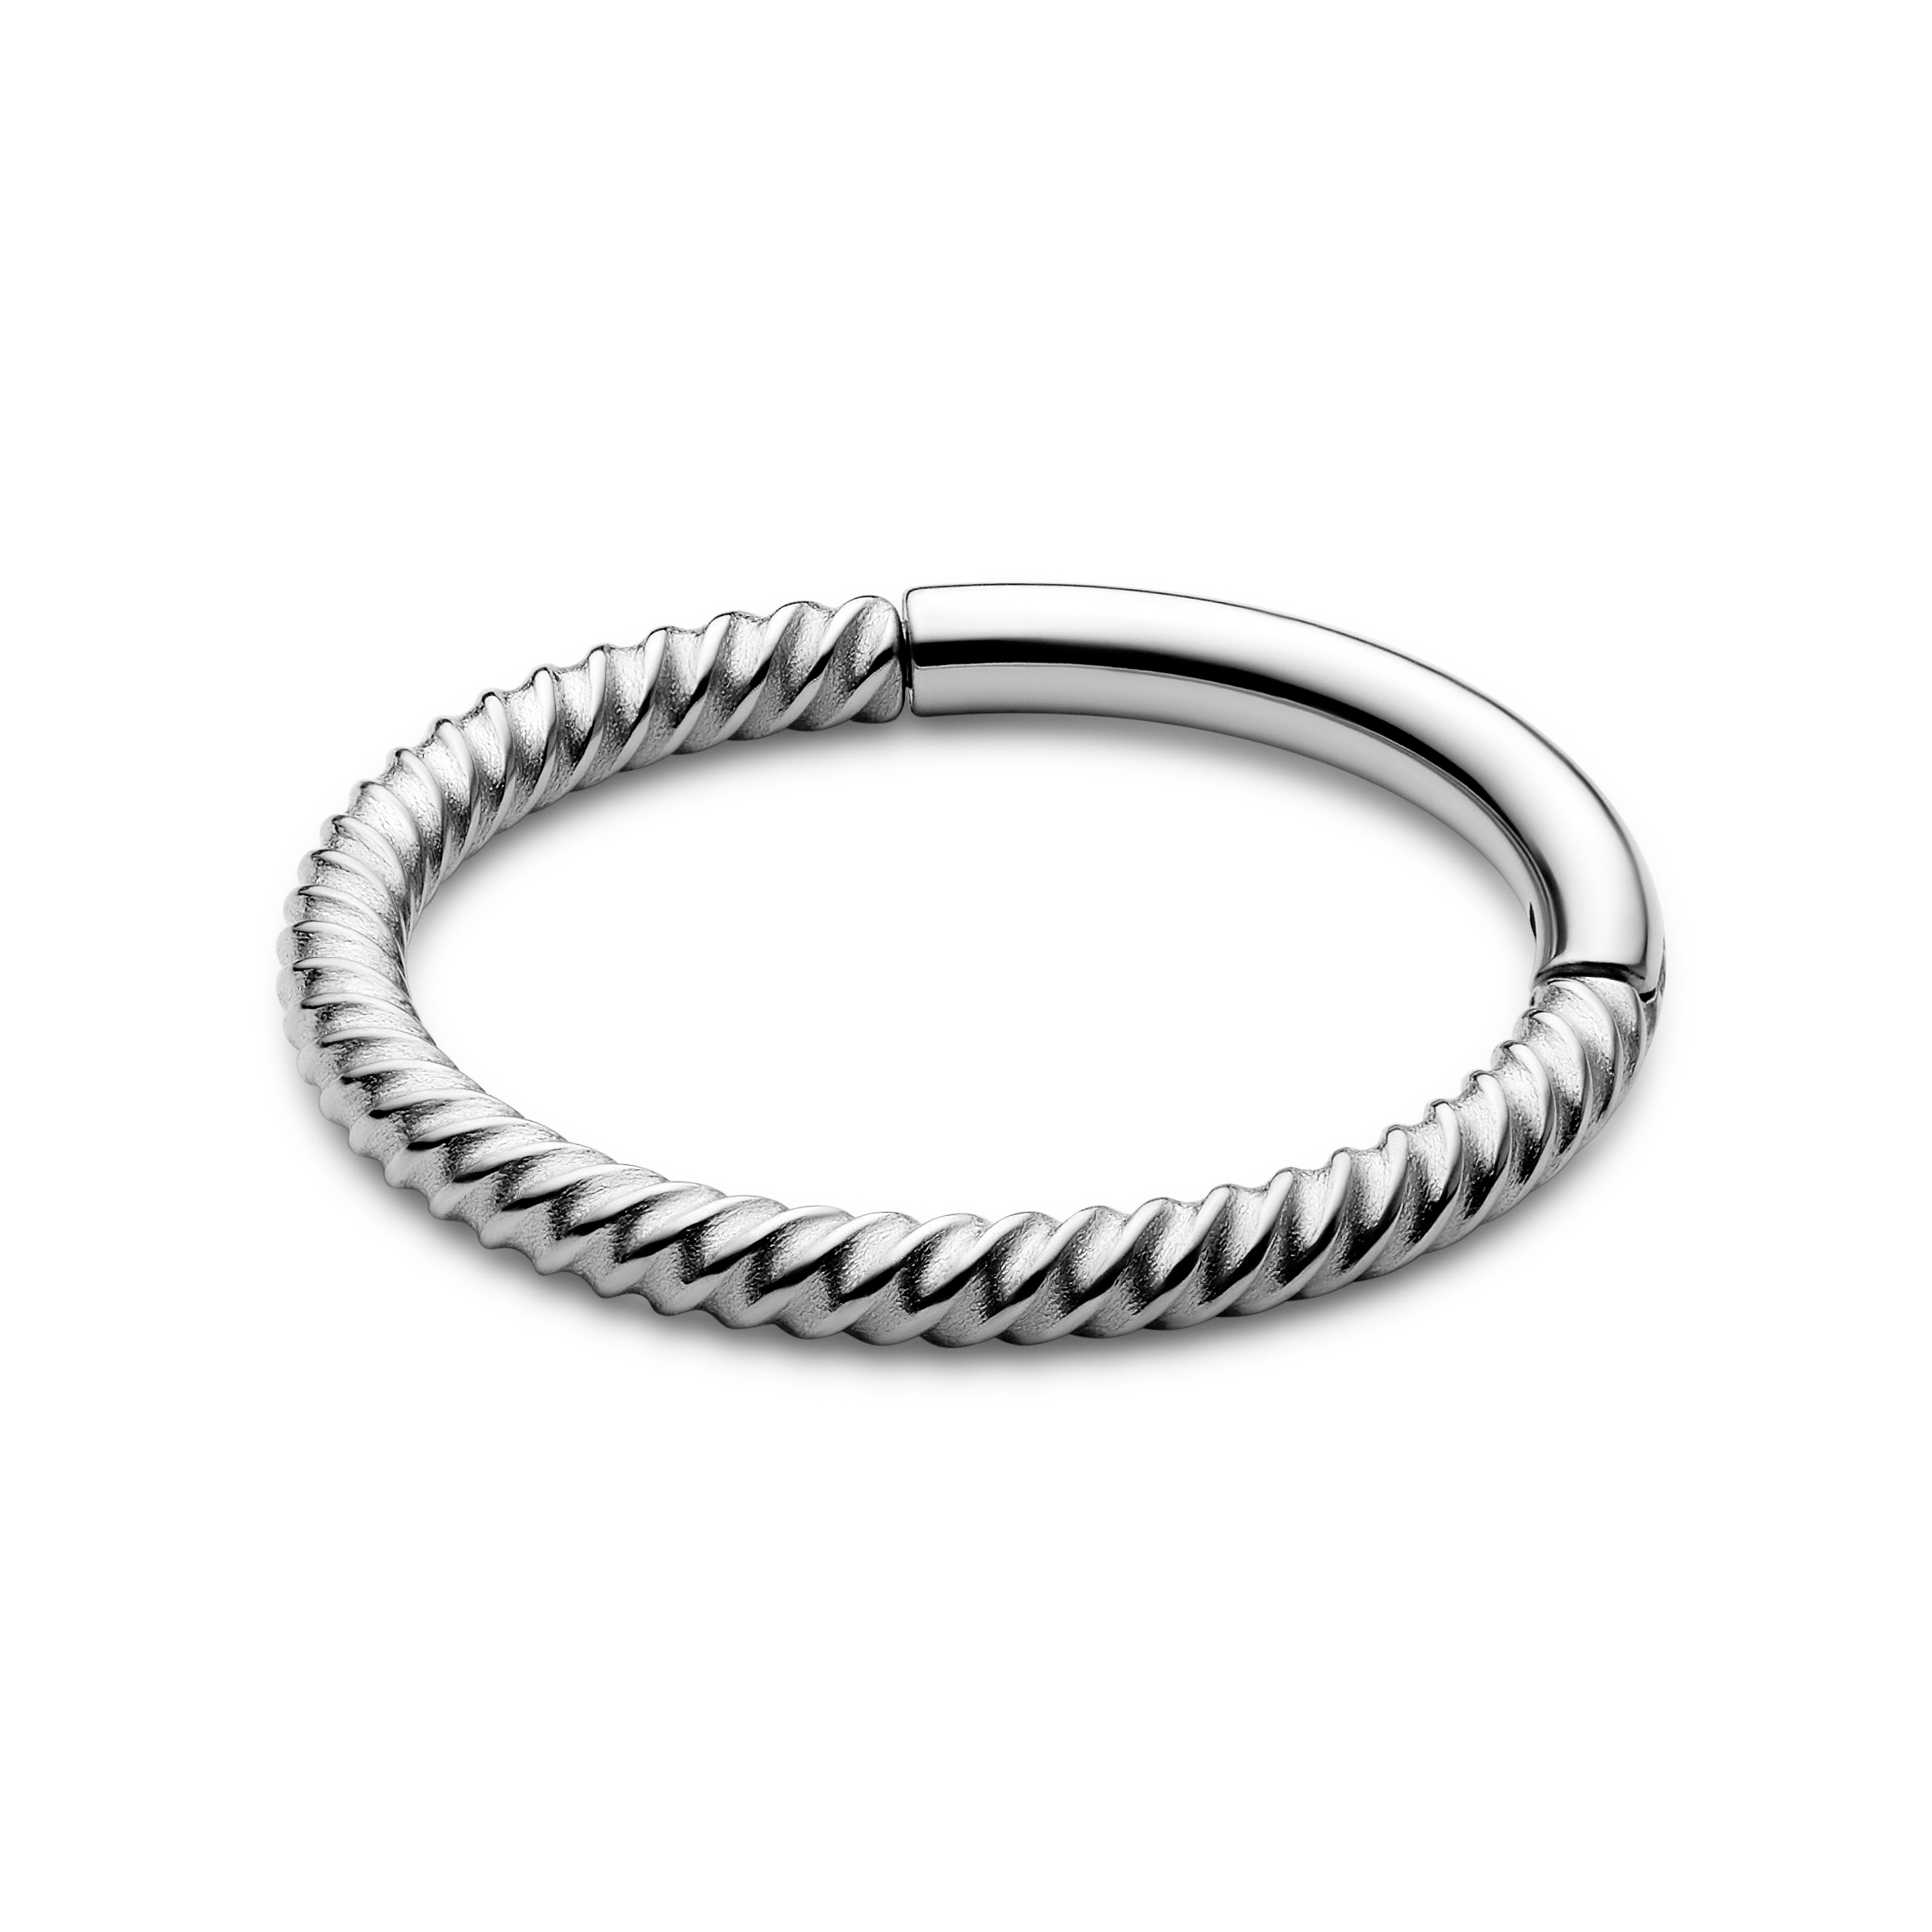 Surgical Steel Curved Barbell Eyebrow Ring (18 Gauge, 8mm) - Walmart.com